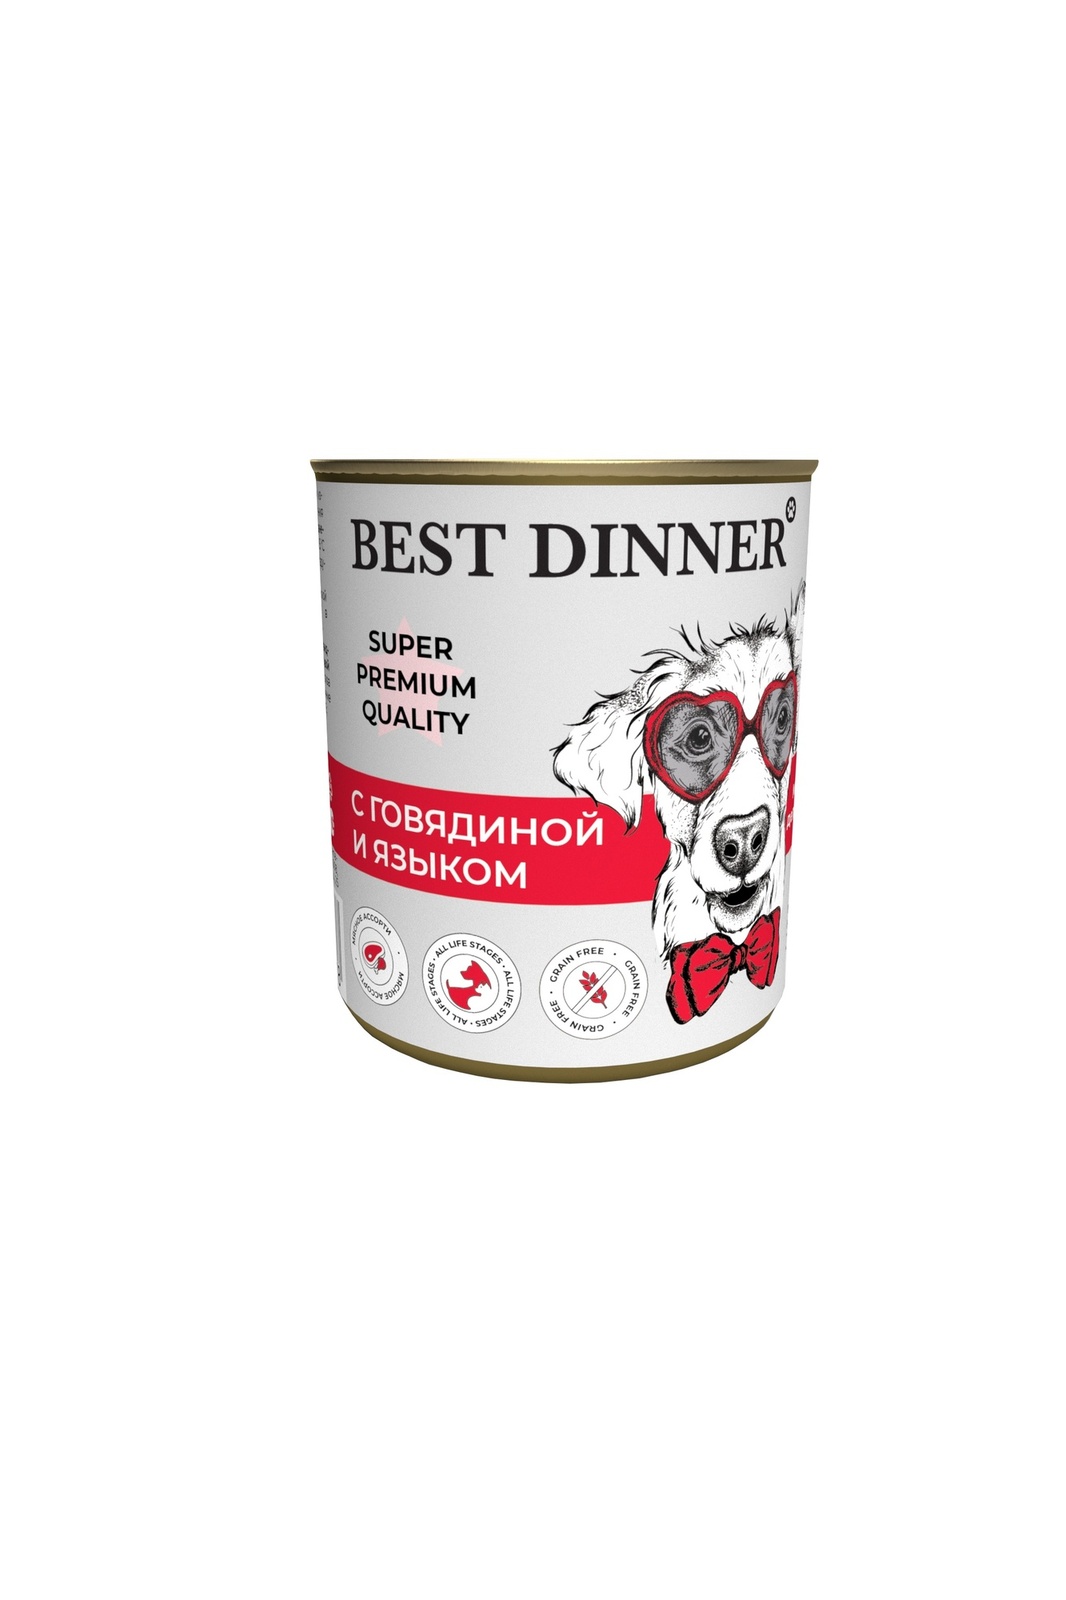 Best Dinner Best Dinner консервы для собак Super Premium С говядиной и языком (340 г) best dinner best dinner консервы premium меню 4 с телятиной и овощами 340 г